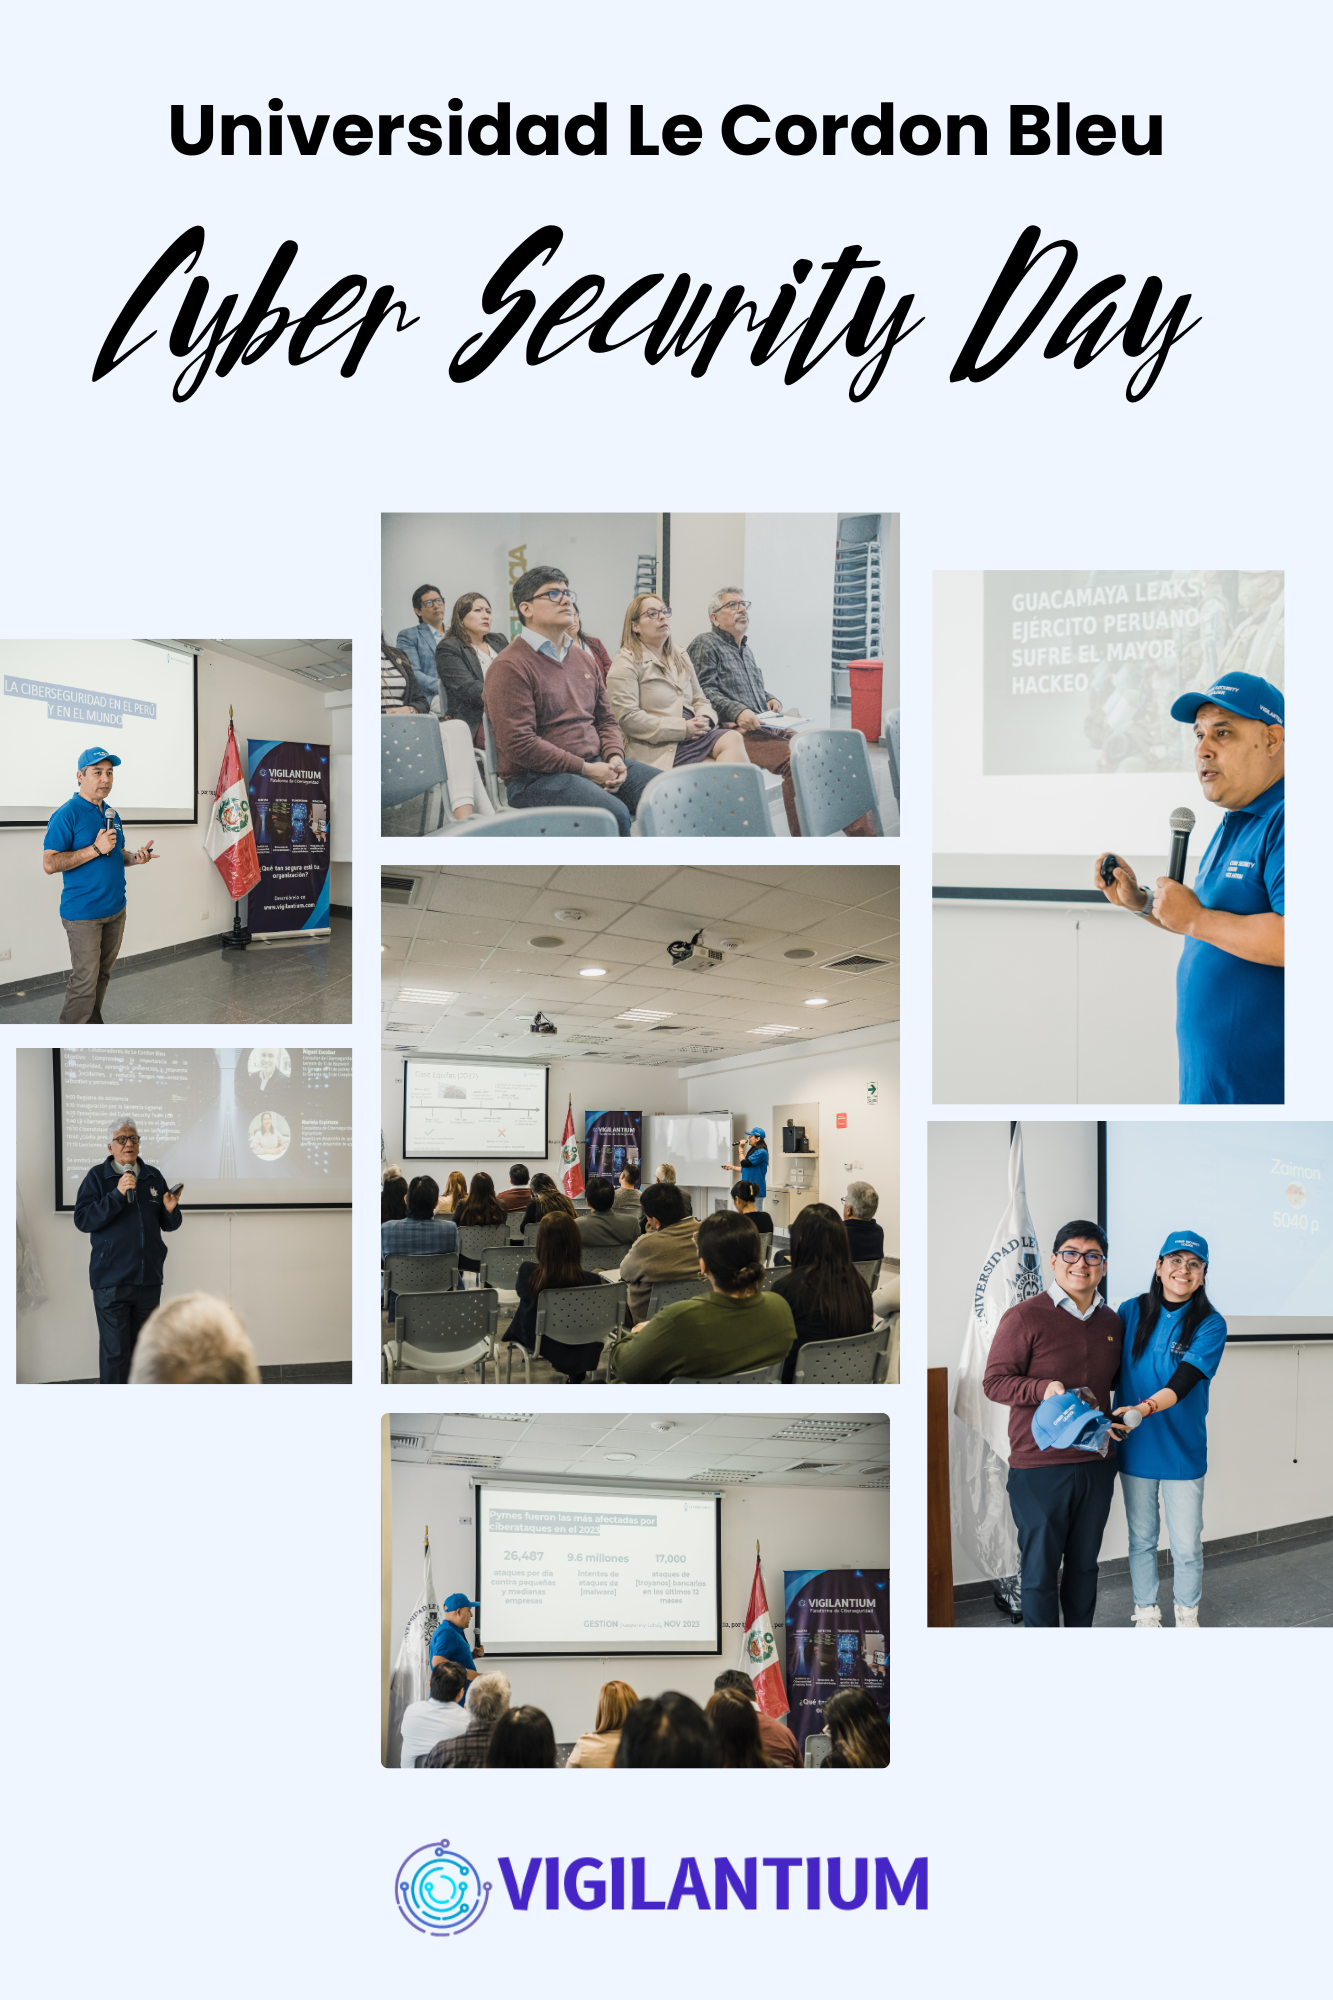 Éxito Rotundo en el Cyber Security Day con Universidad Le Cordon Bleu